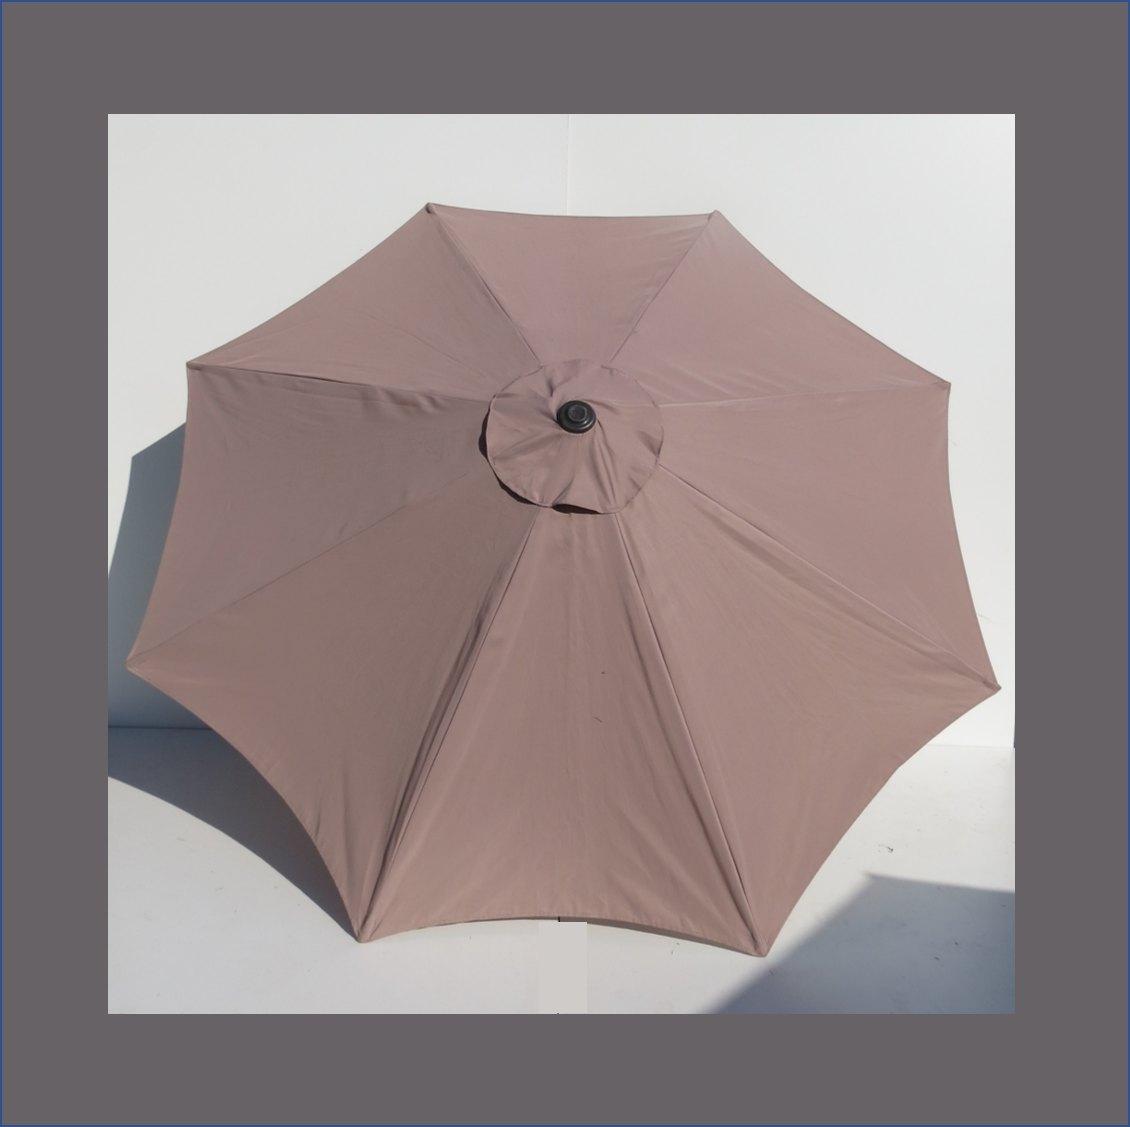 khaki-parasol-umbrellas